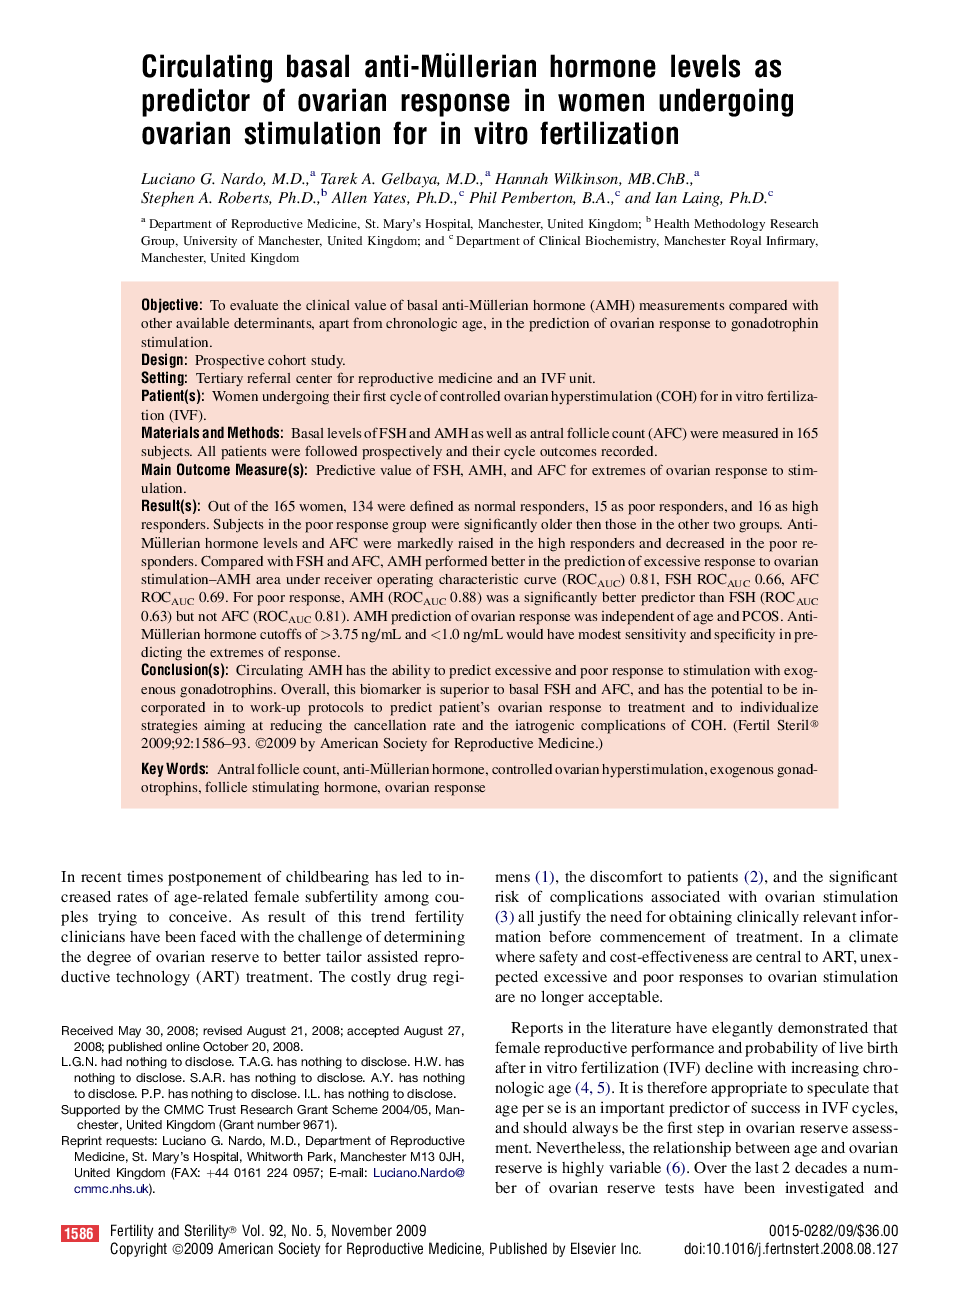 Circulating basal anti-Müllerian hormone levels as predictor of ovarian response in women undergoing ovarian stimulation for in vitro fertilization 